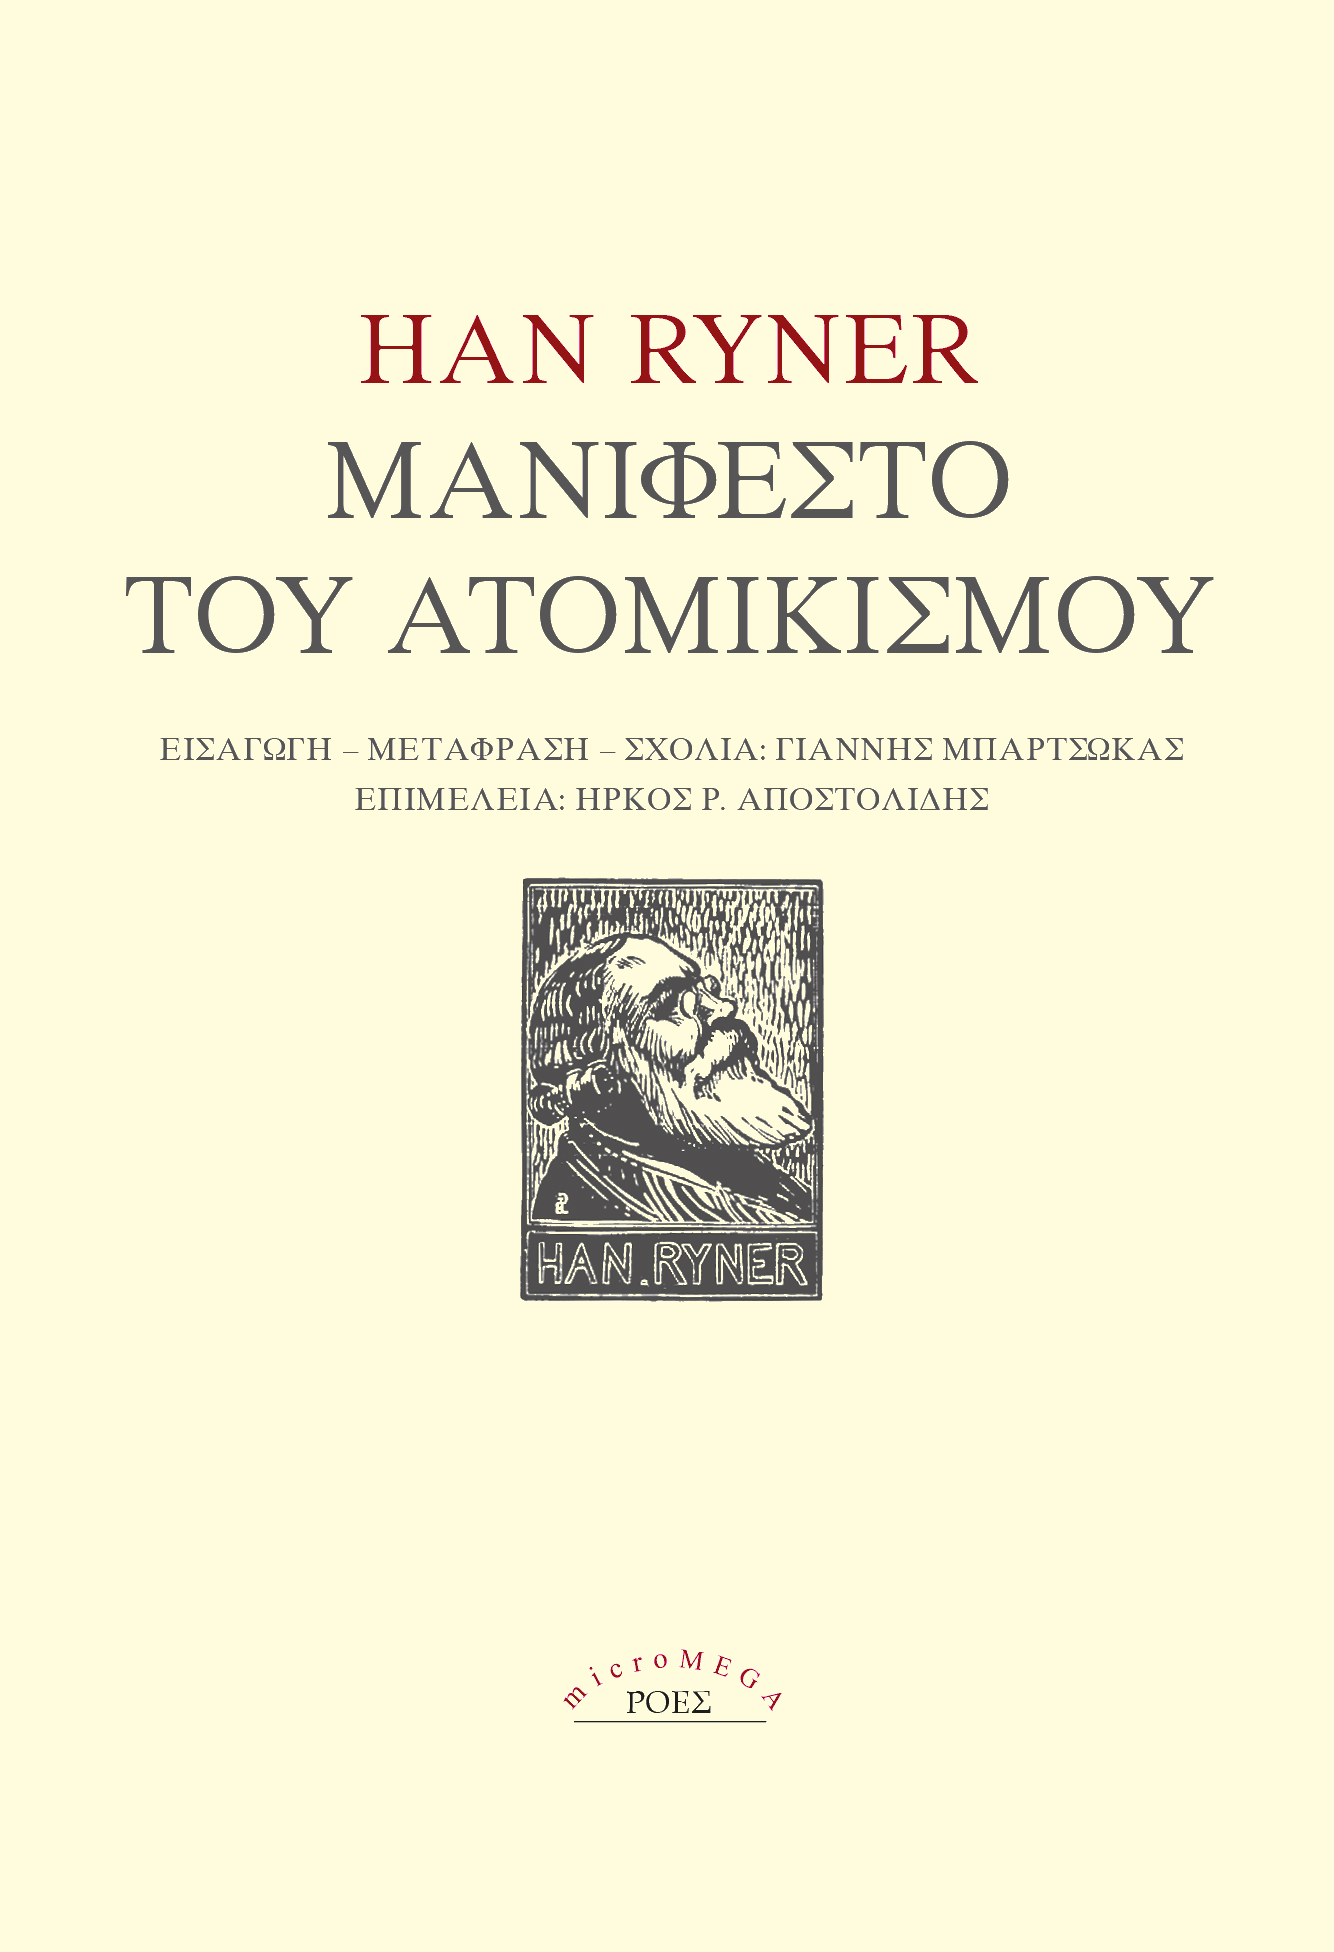 You are currently viewing Han Ryner: Μανιφέστο του ατομικισμού. Μετάφραση: Γιάννης Μπαρτσώκας – Επιμέλεια: Ήρκος Ρ. Αποστολίδης Σελ. 112. Εκδόσεις Ροές / micromega 